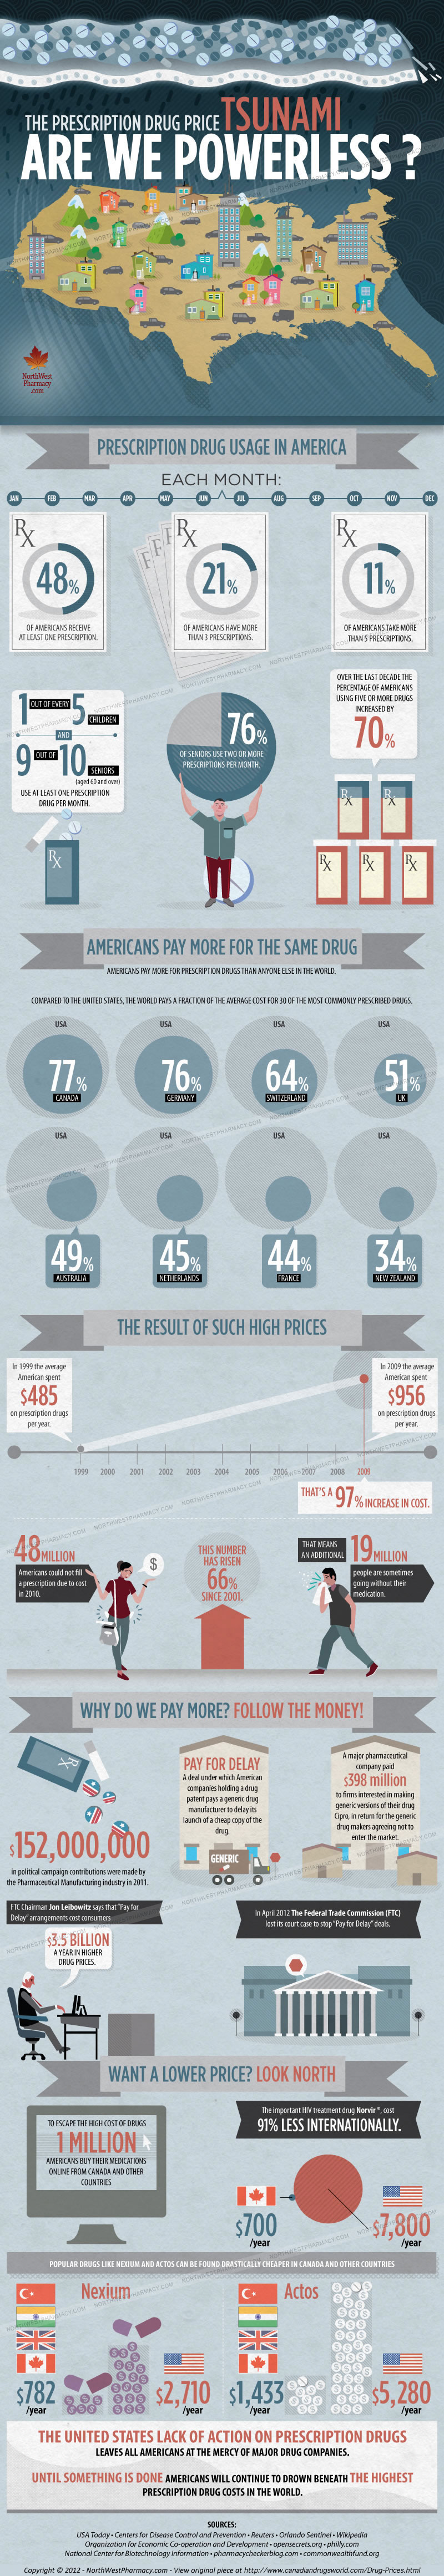 The Prescription Drug Price Tsunami. Are We Powerless? - Infographic